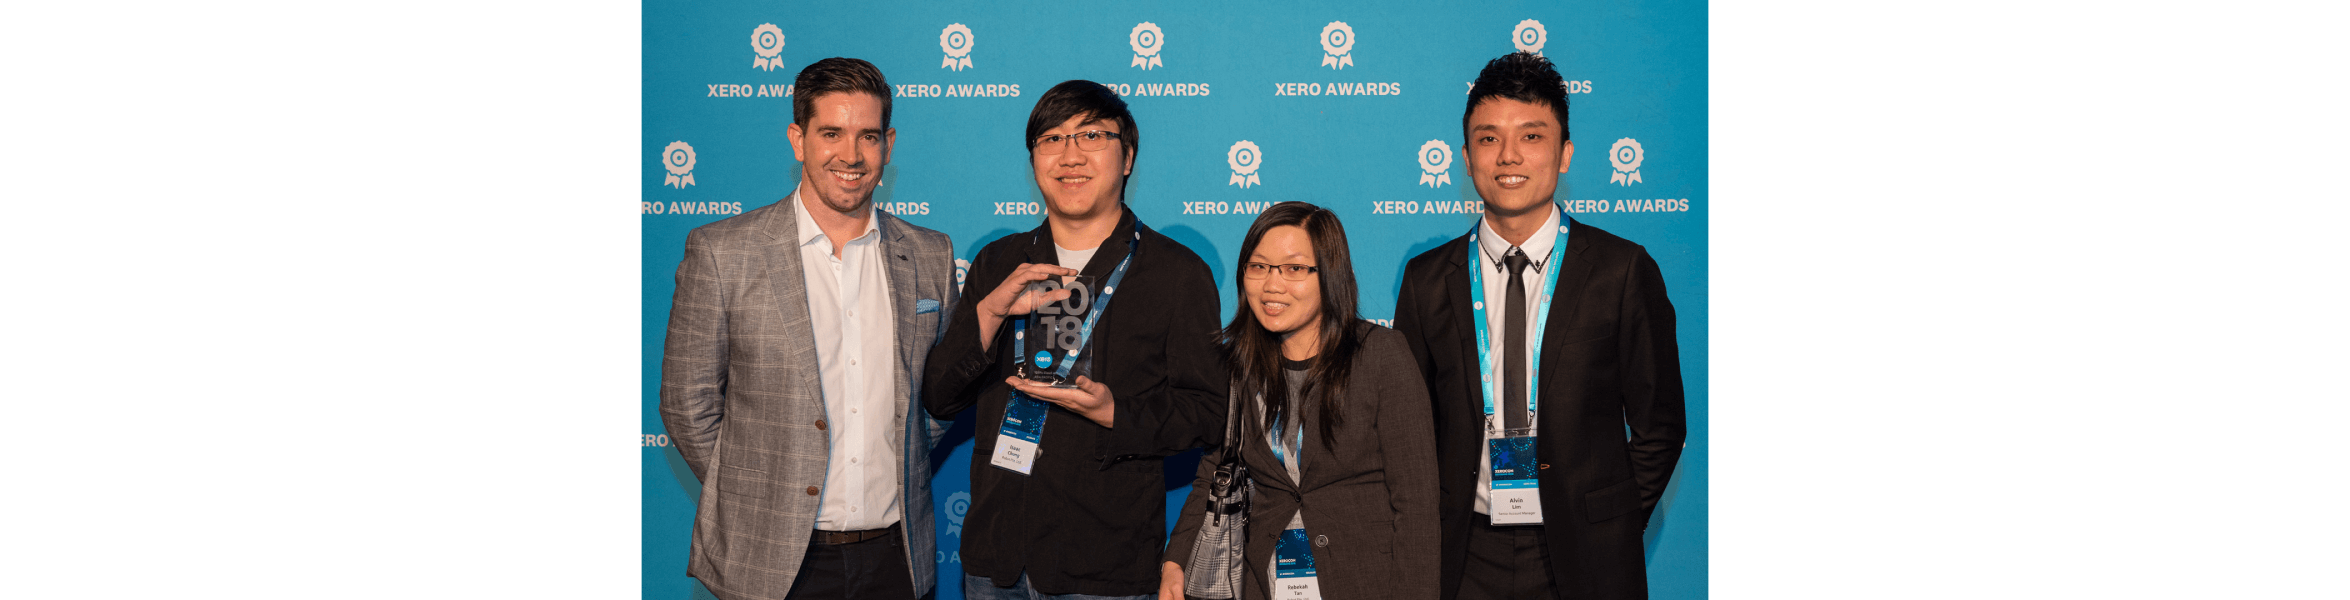 Members of the team at Robot celebrate winning the 2018 100% Xero Award.